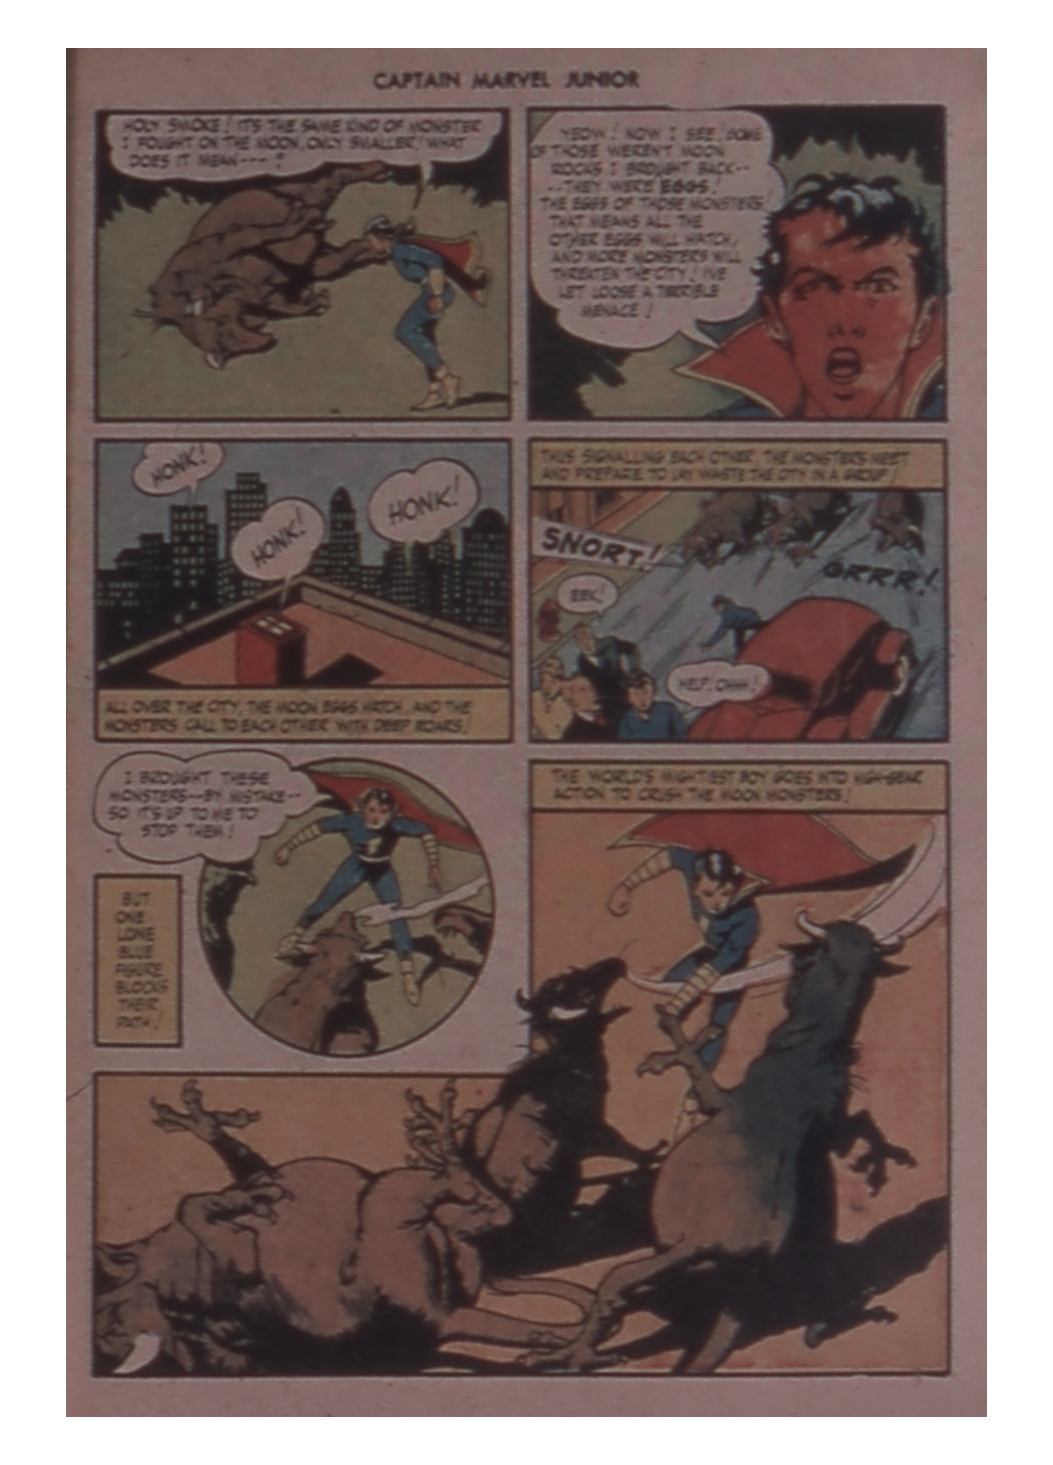 Read online Captain Marvel, Jr. comic -  Issue #28 - 31